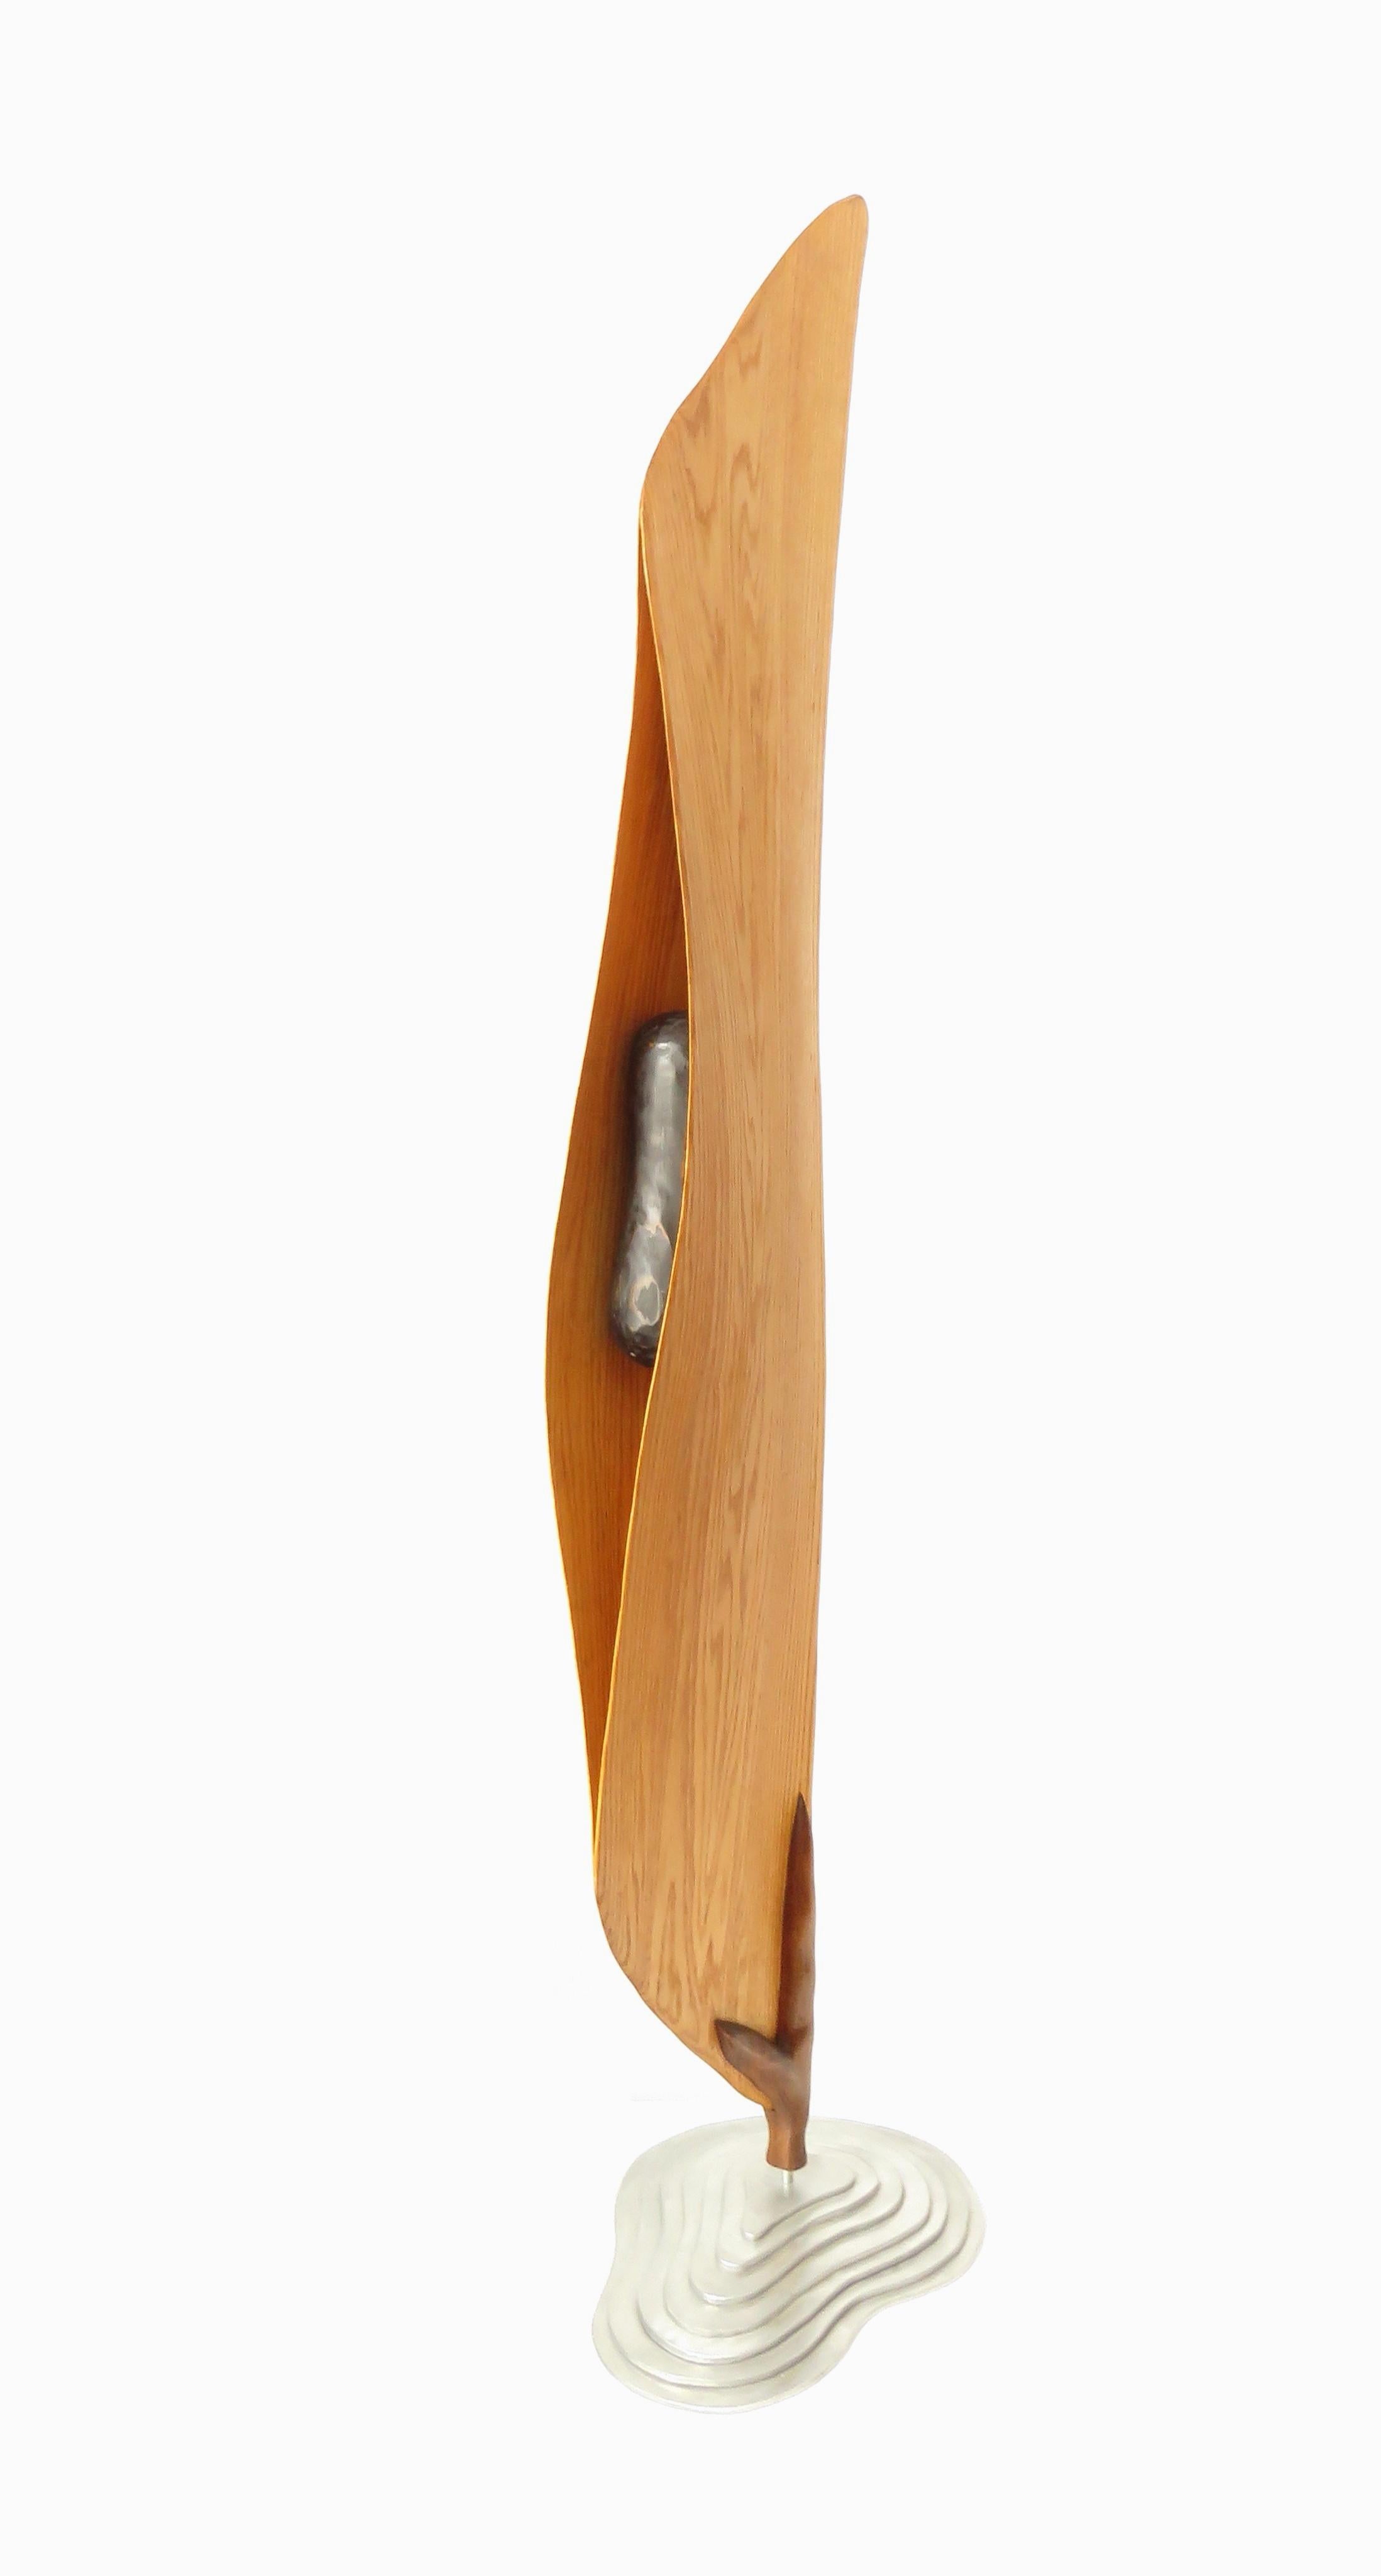 Cocoon (wood red oak bird abstract art zen sculpture pedestal minimal pea pod)